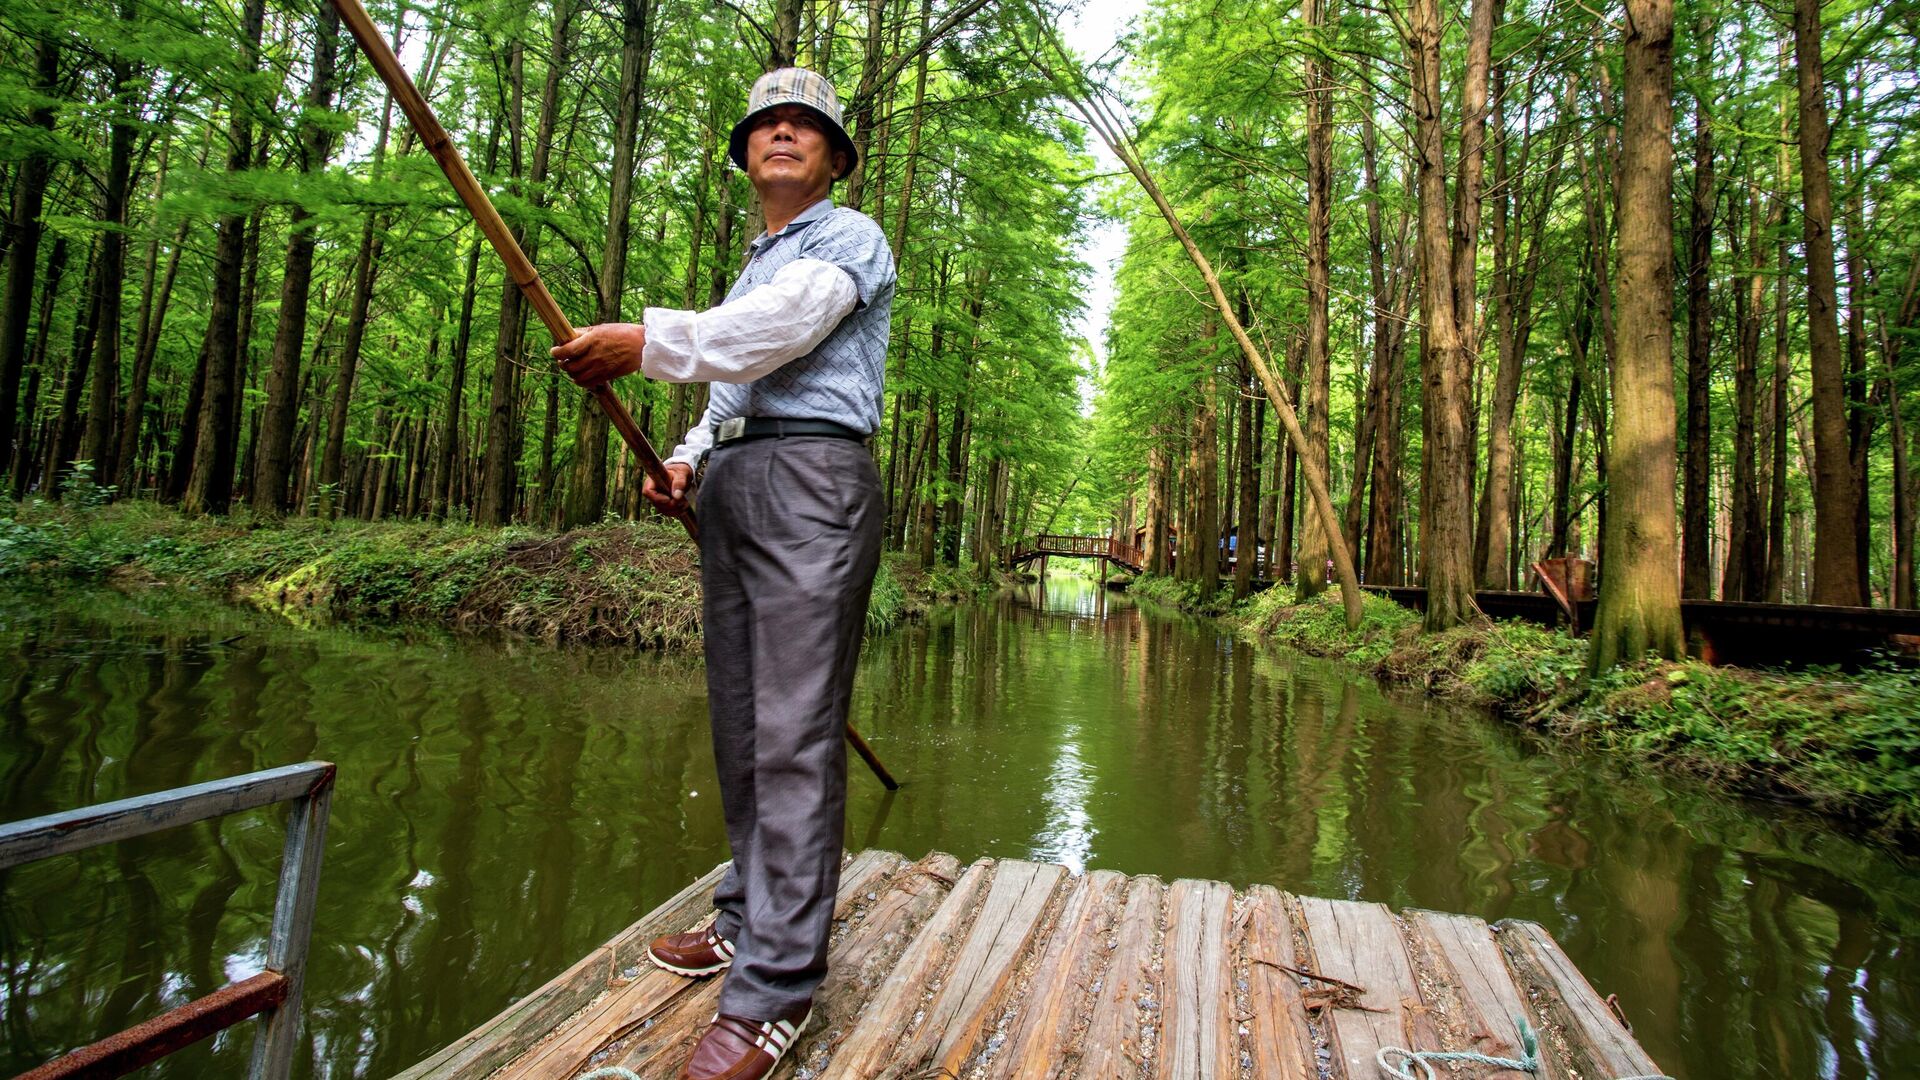 Мужчина на деревянном плоту в бамбуковой роще, провинция Чжэцзян, Китай - РИА Новости, 1920, 03.11.2021